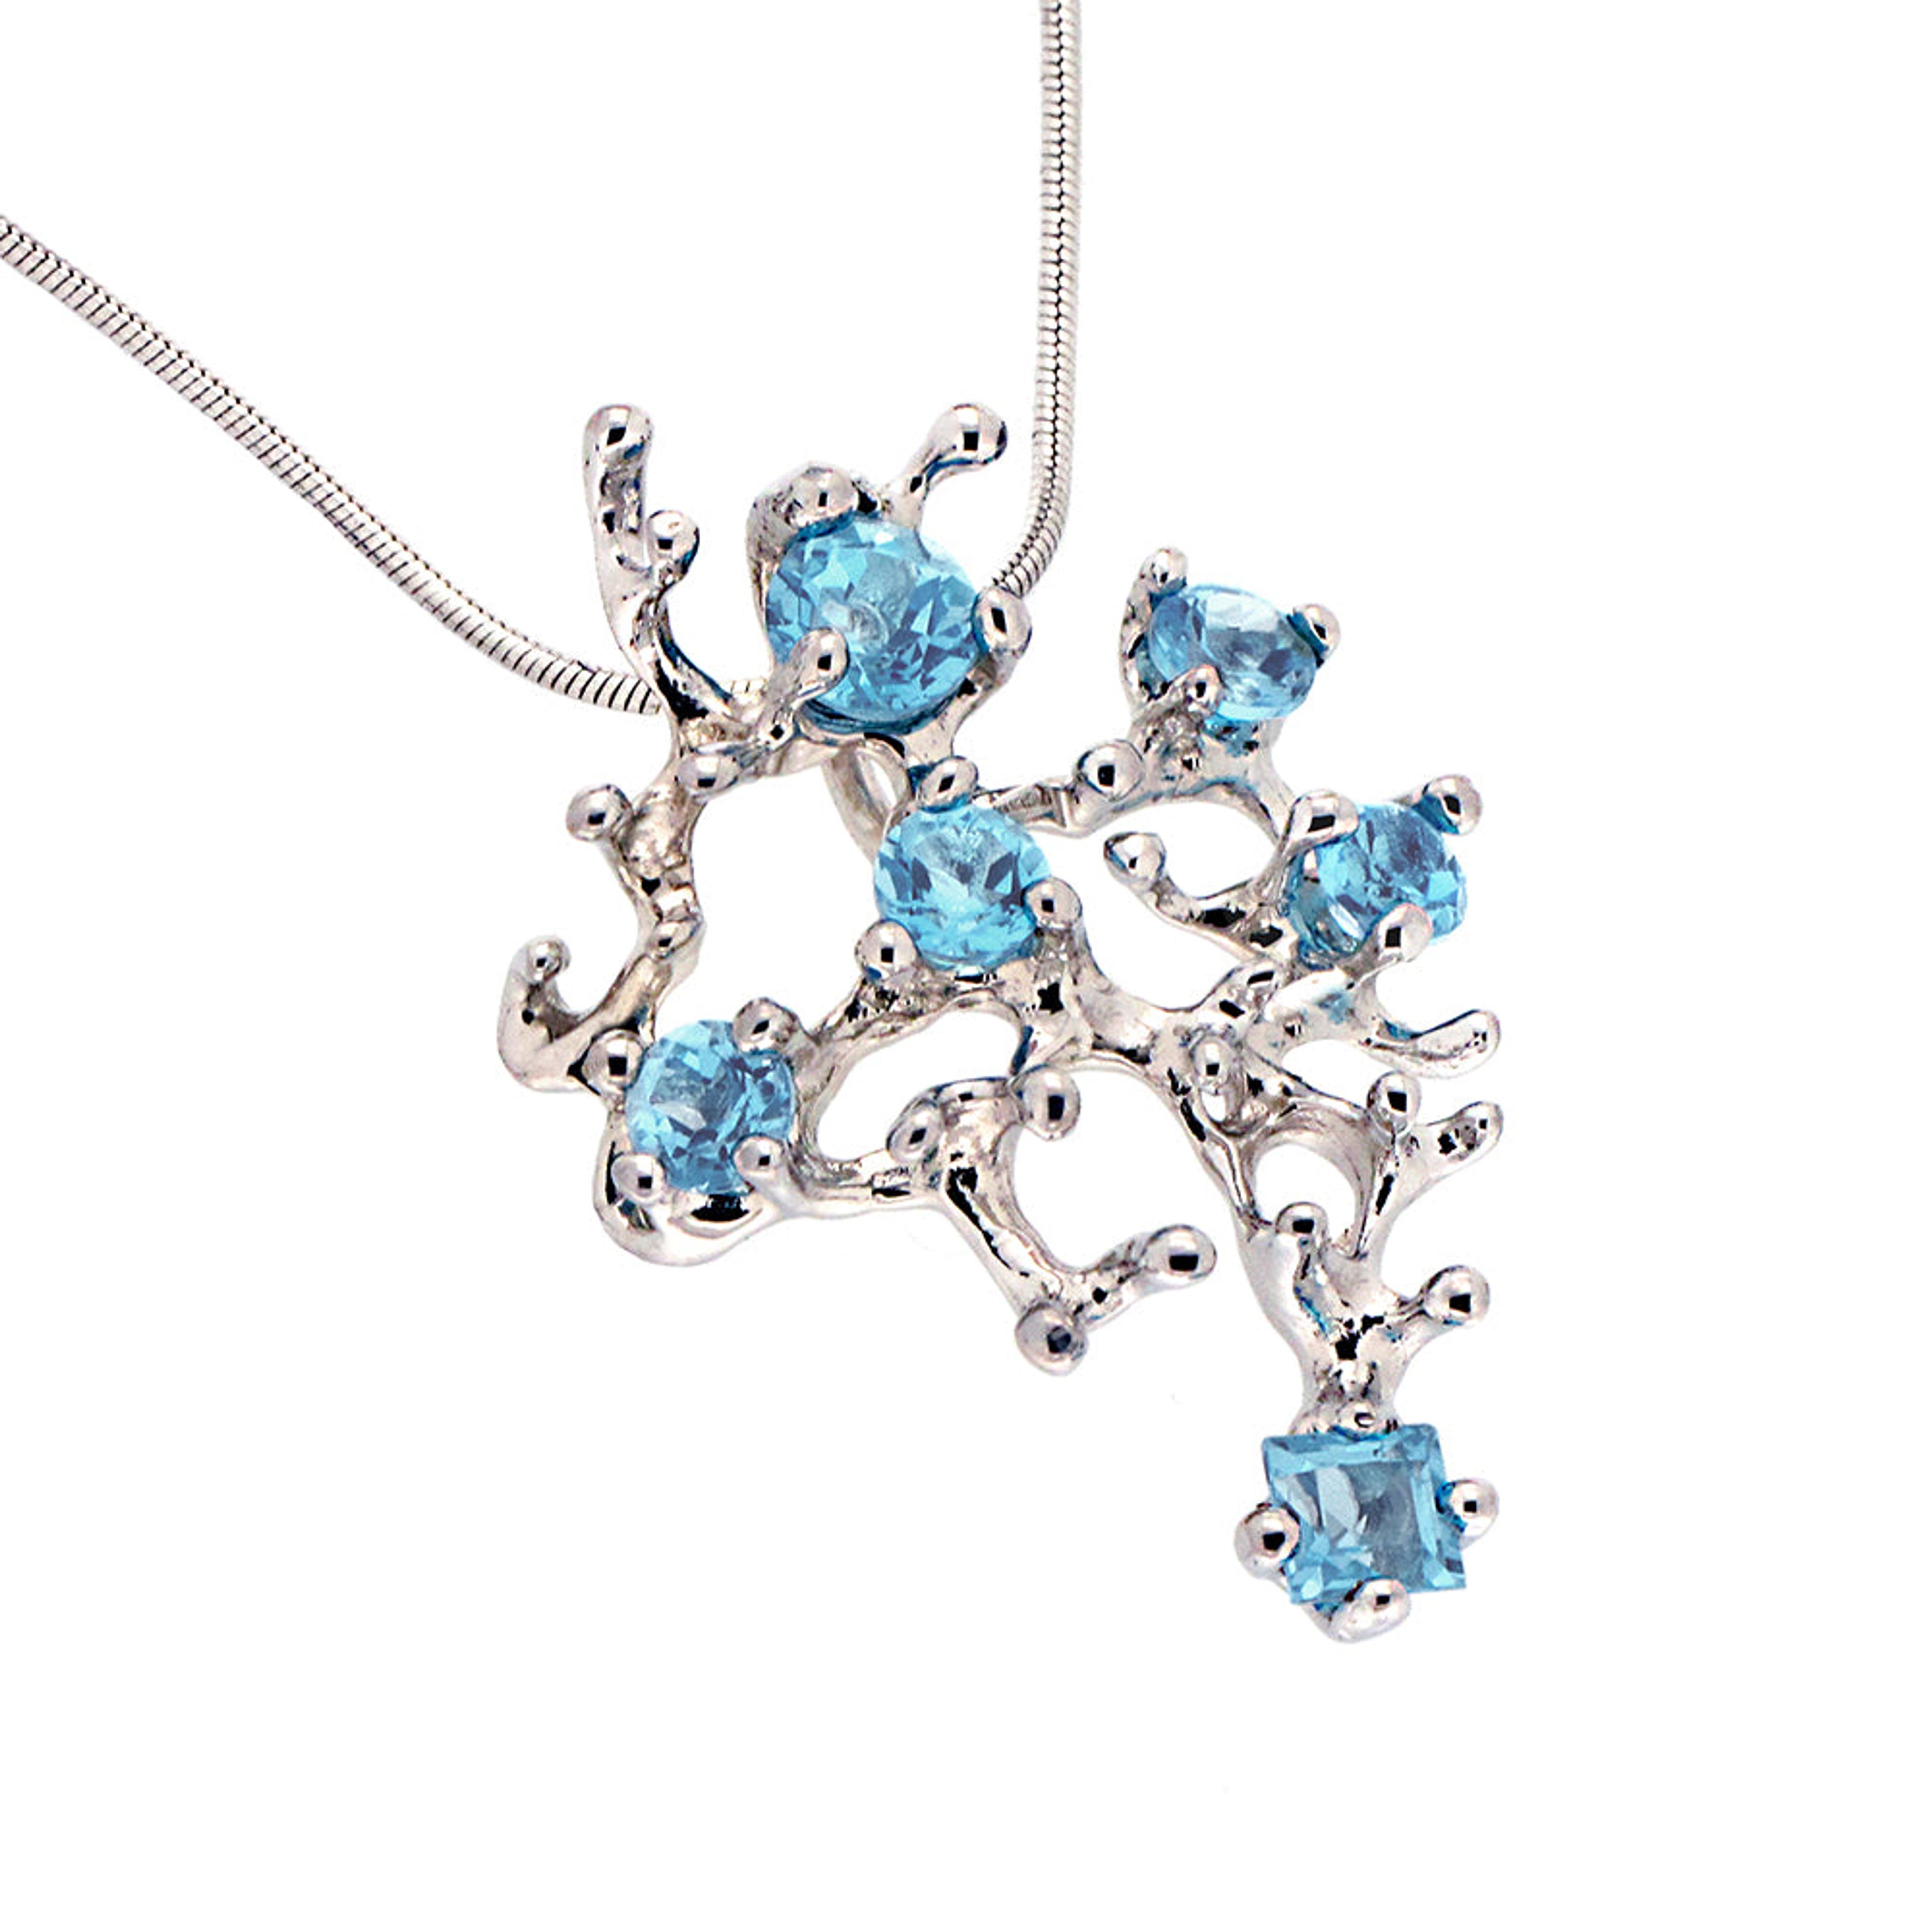 Coral Reef Blue Topaz Pendant Necklace